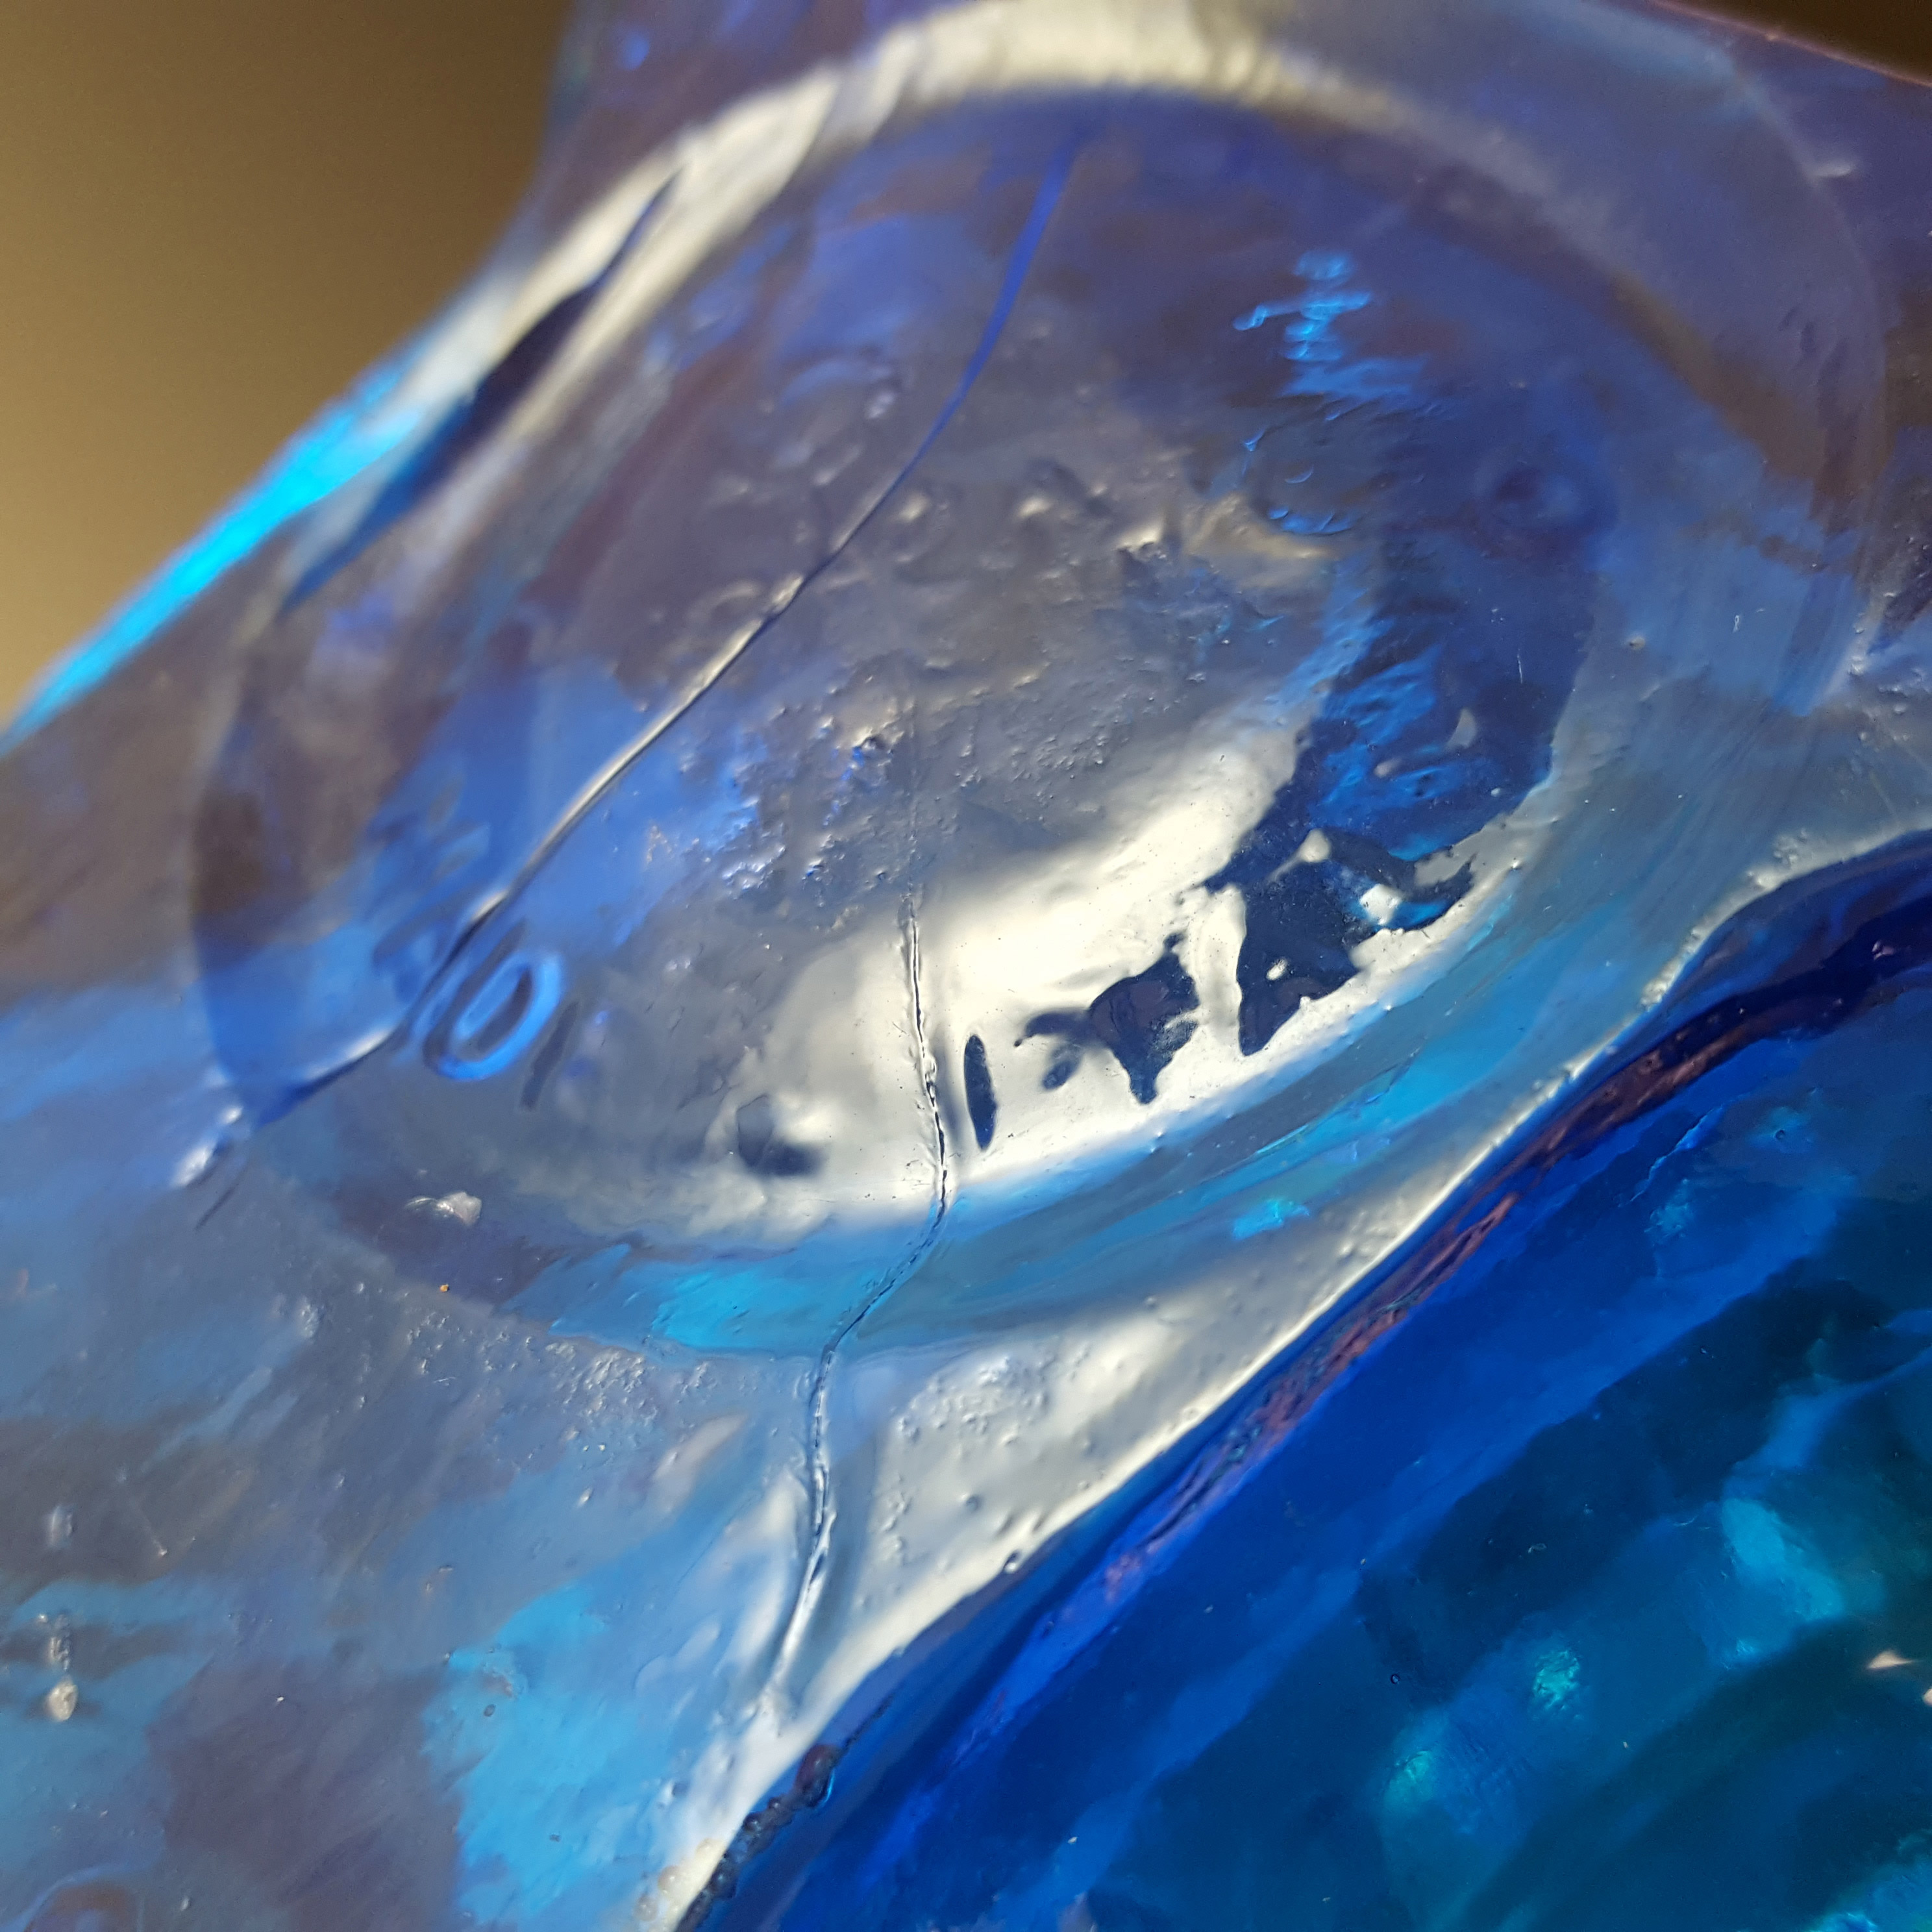 Empoli Italian Blue Glass Comical Car Decorative Bottle - Click Image to Close